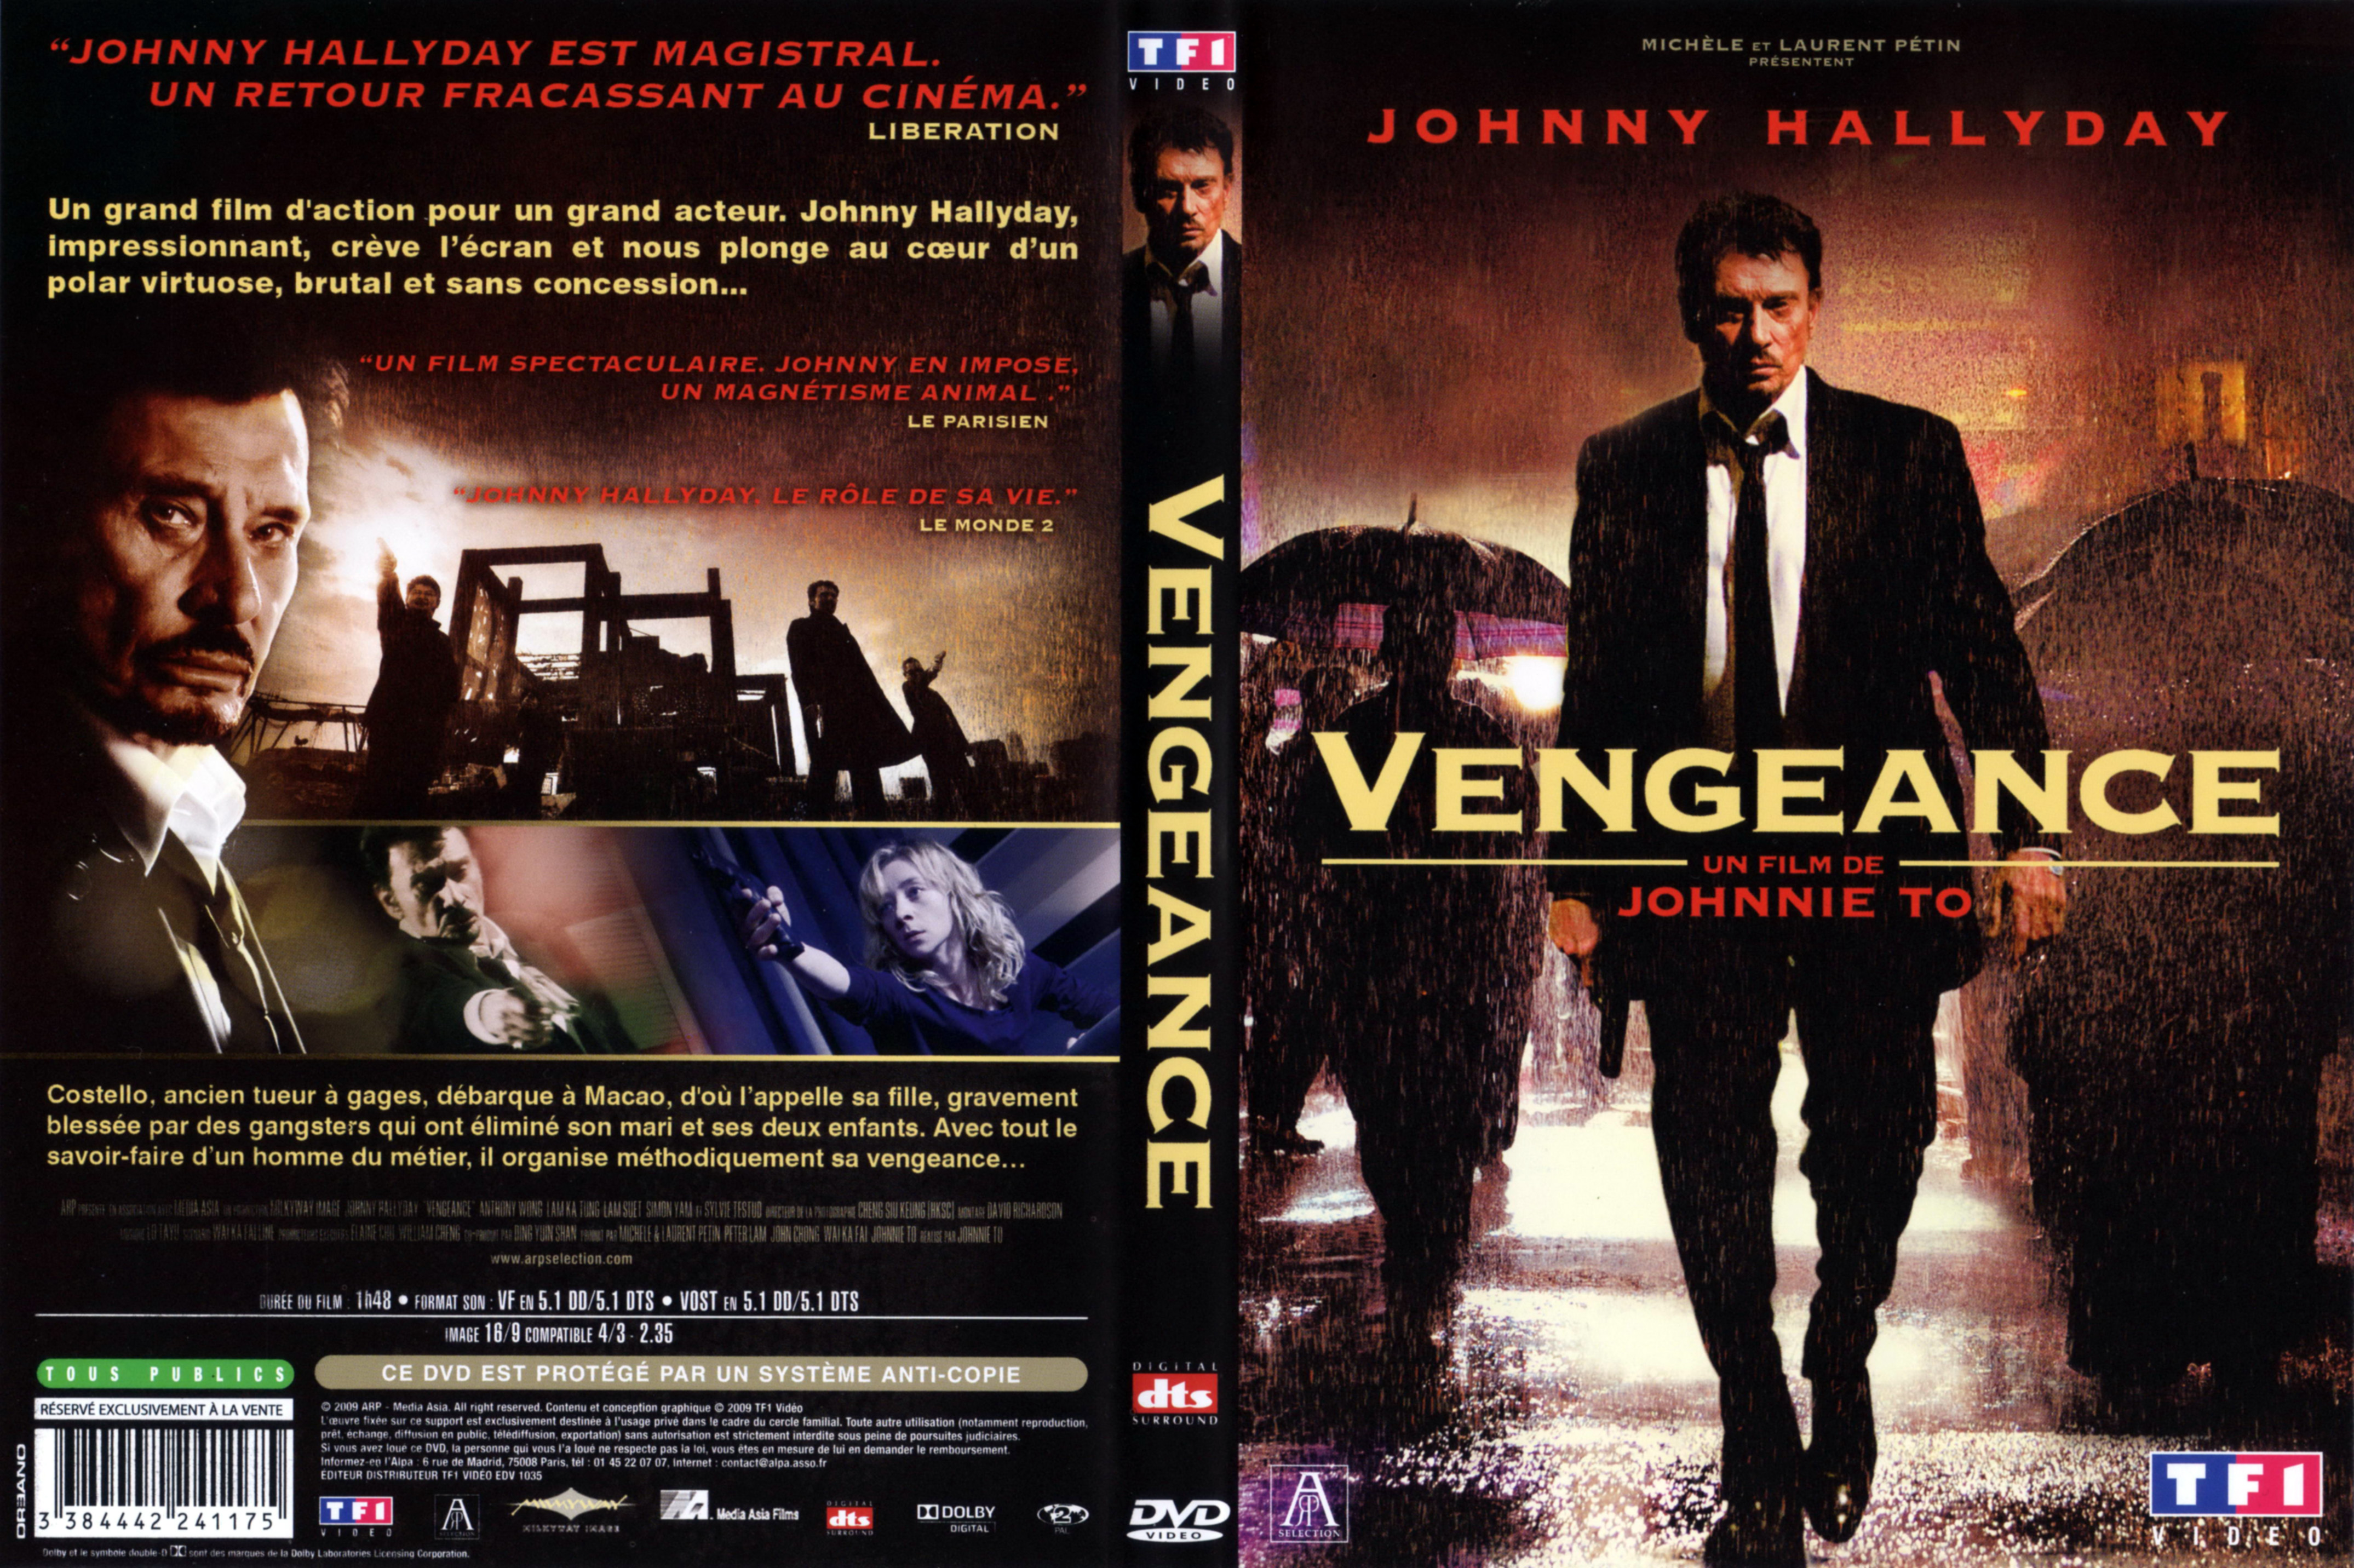 Jaquette DVD Vengeance (Johnny Hallyday)